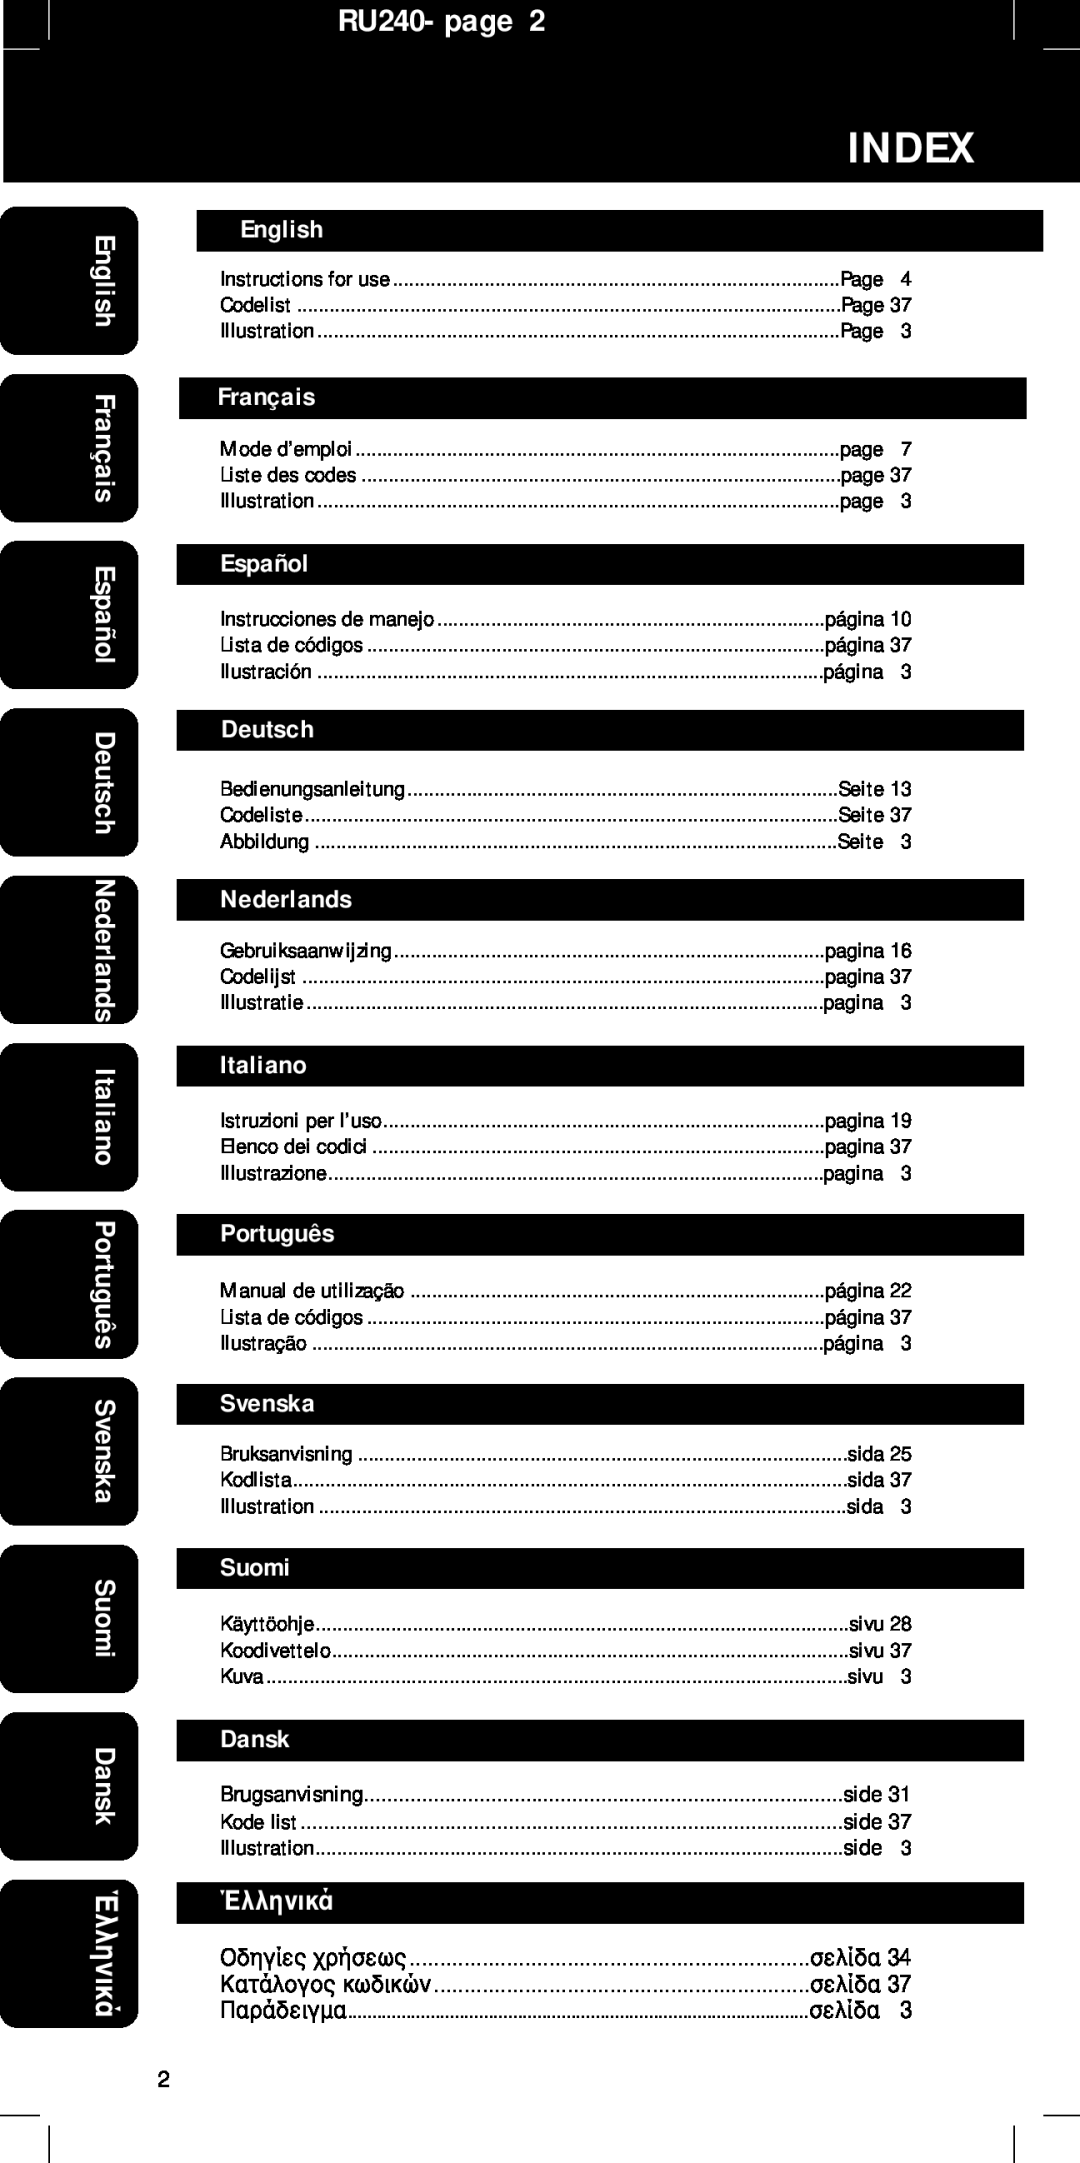 Philips Index, RU240- page, English, Français, Español, Deutsch, Nederlands, Italiano, Português, Svenska, Suomi, Dansk 